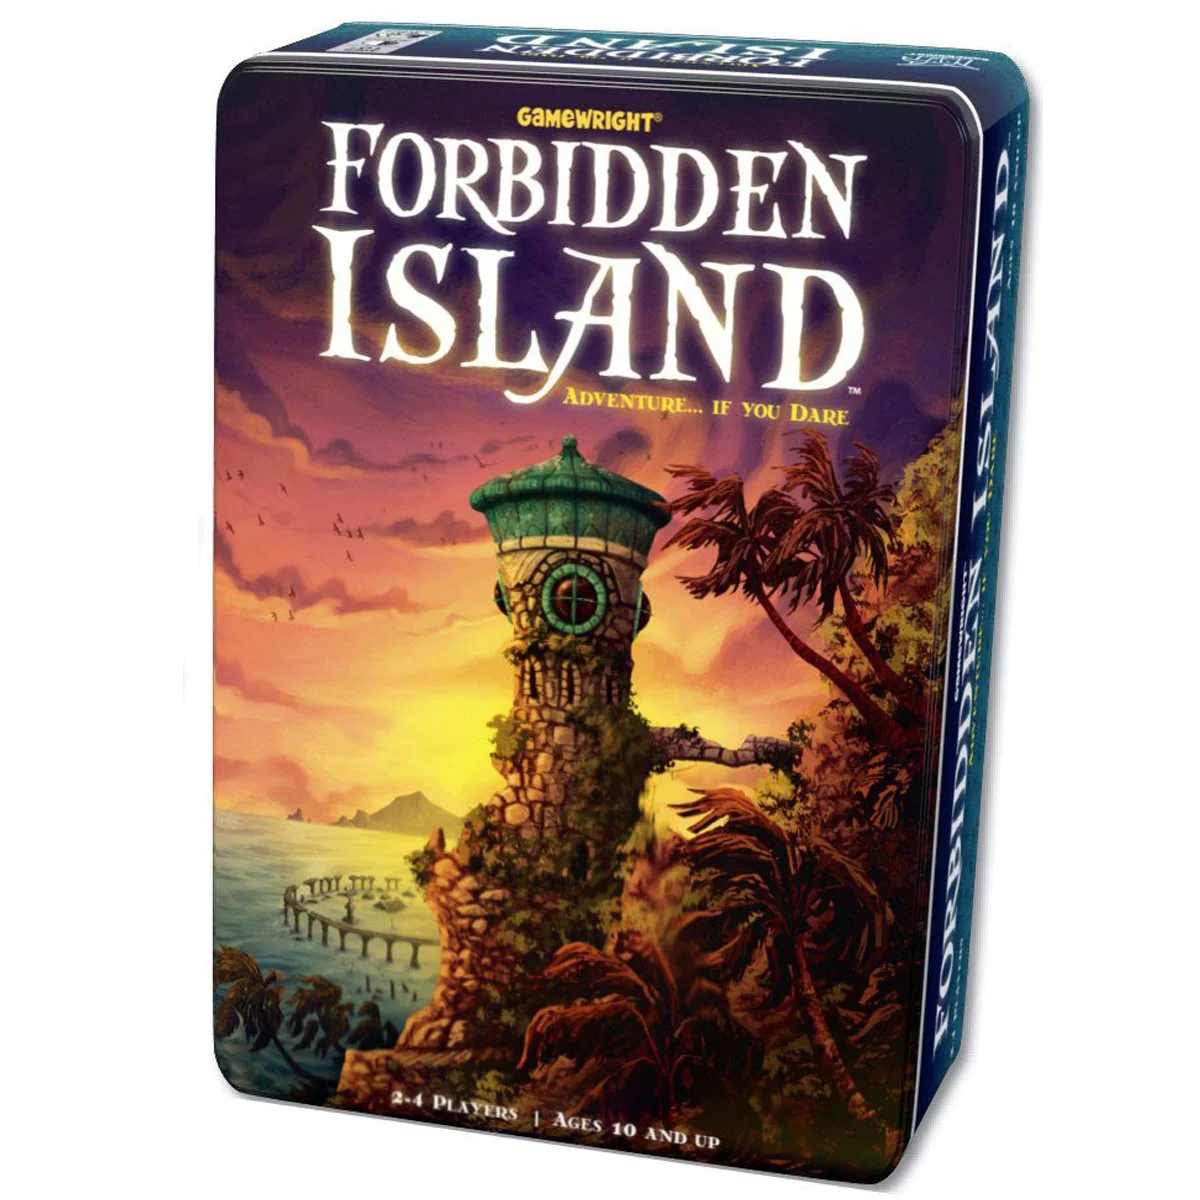 Forbidden Island Adventure... If You Dare